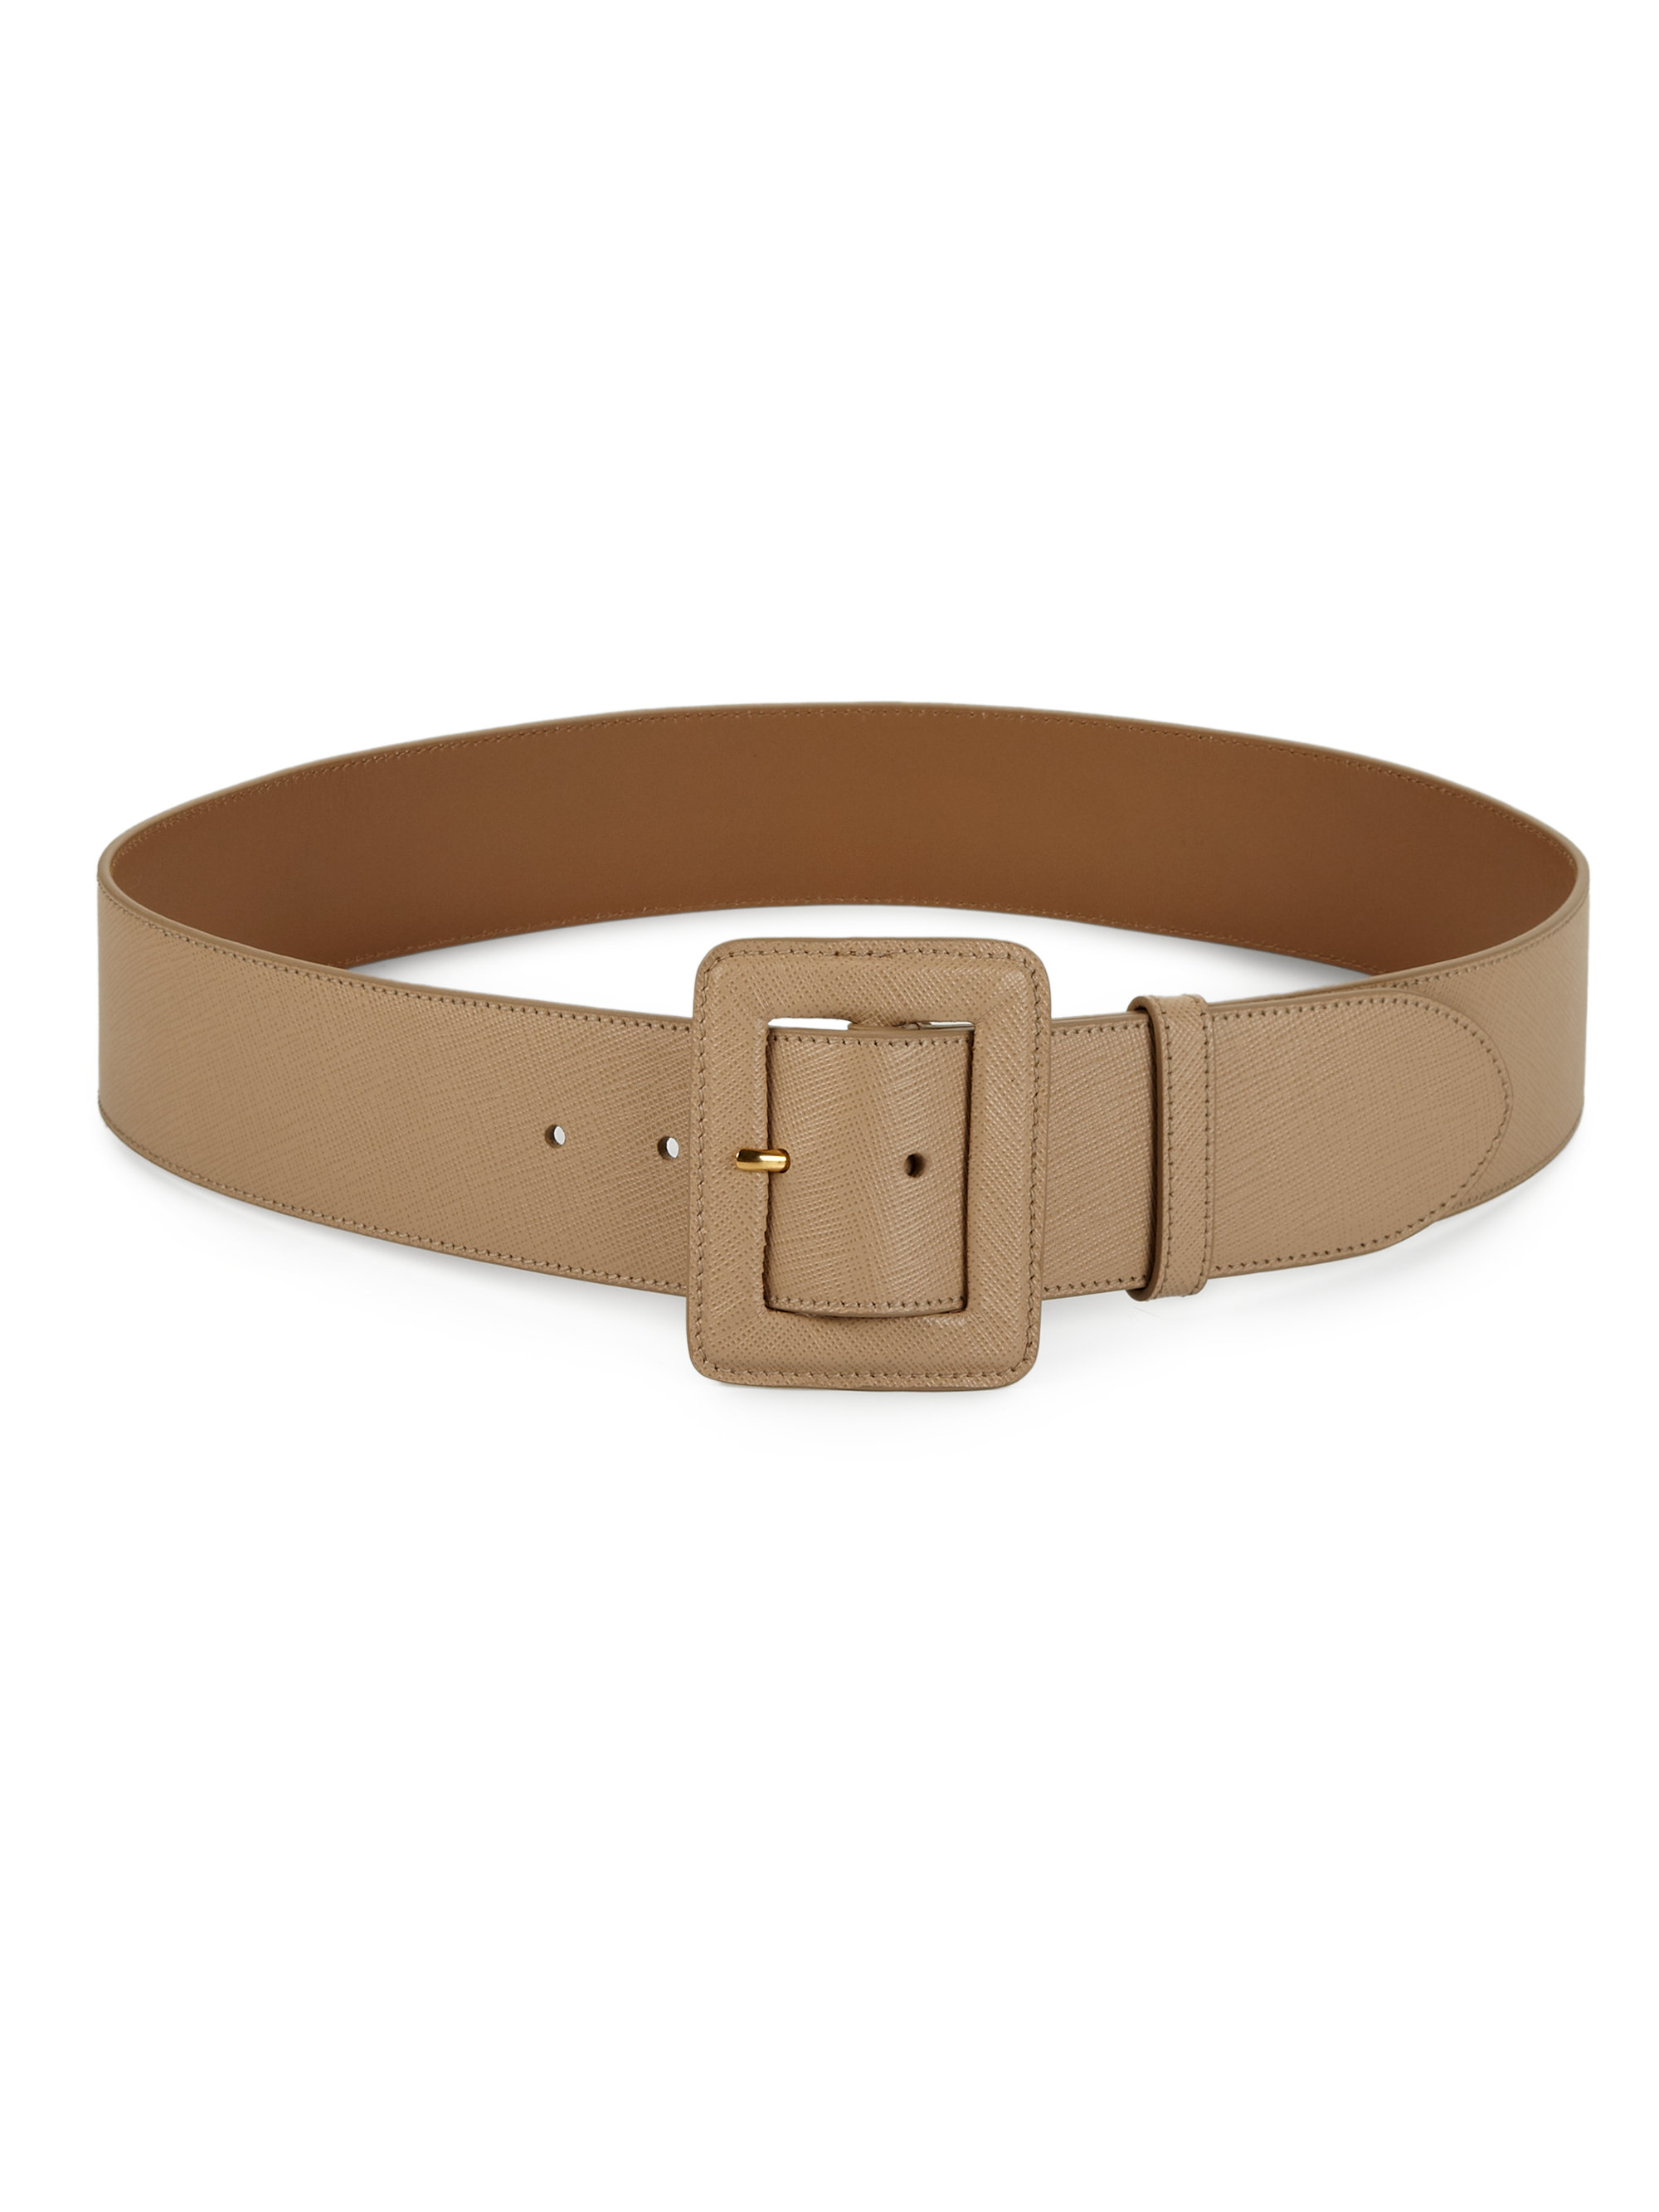 Prada Cinture Leather Belt in Brown (SAND) | Lyst  